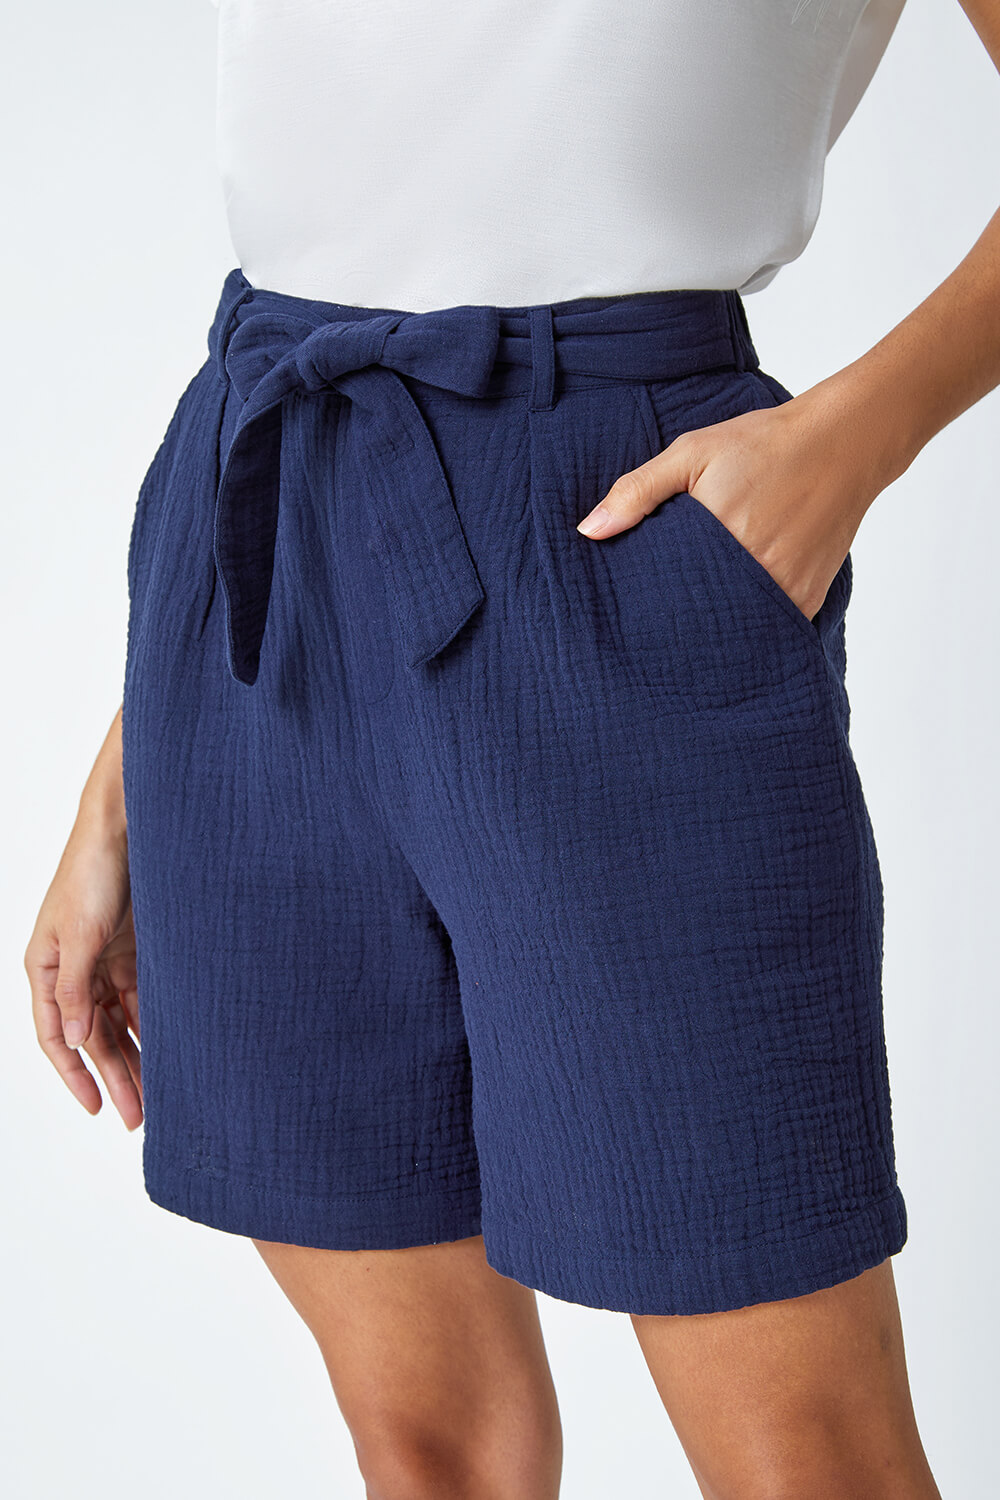 Navy  Textured Tie Waist Cotton Shorts, Image 5 of 5